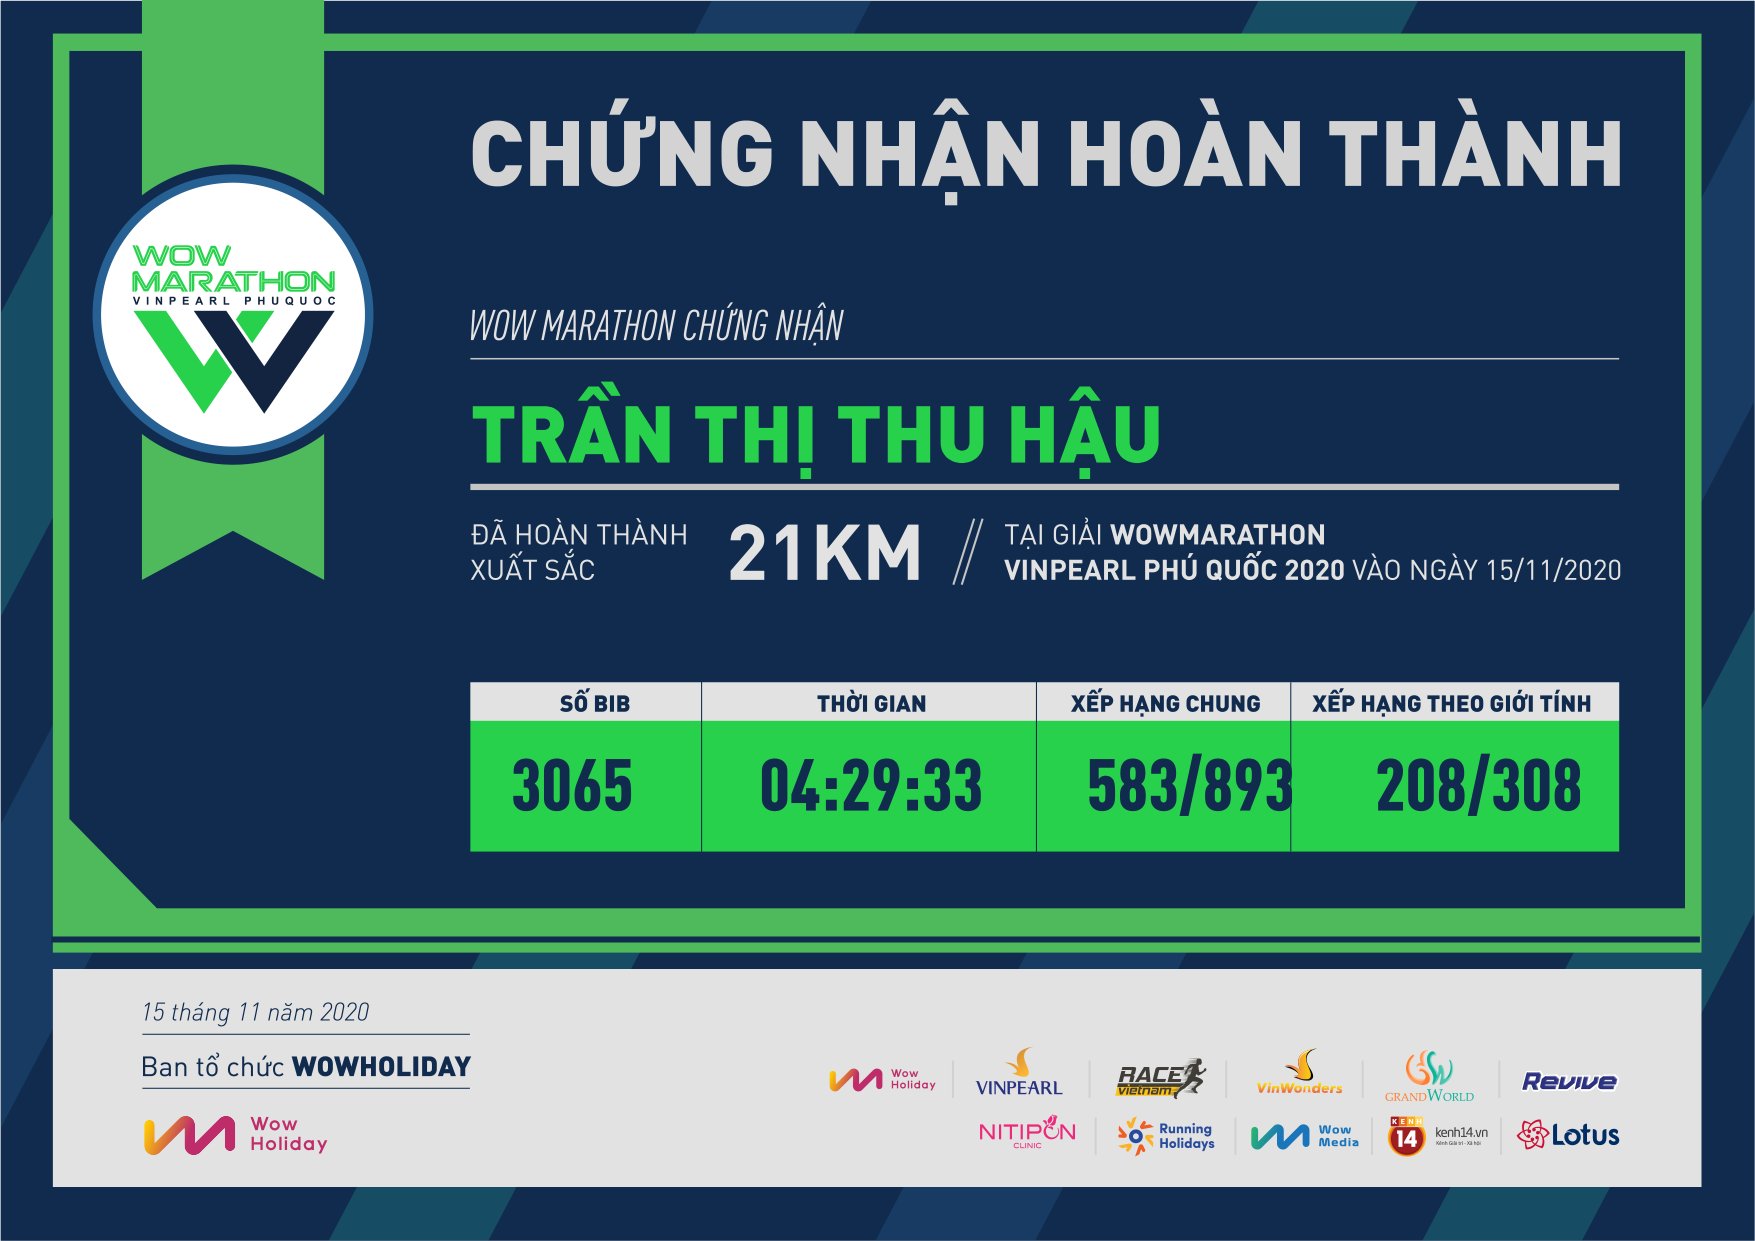 3065 - Trần Thị Thu Hậu